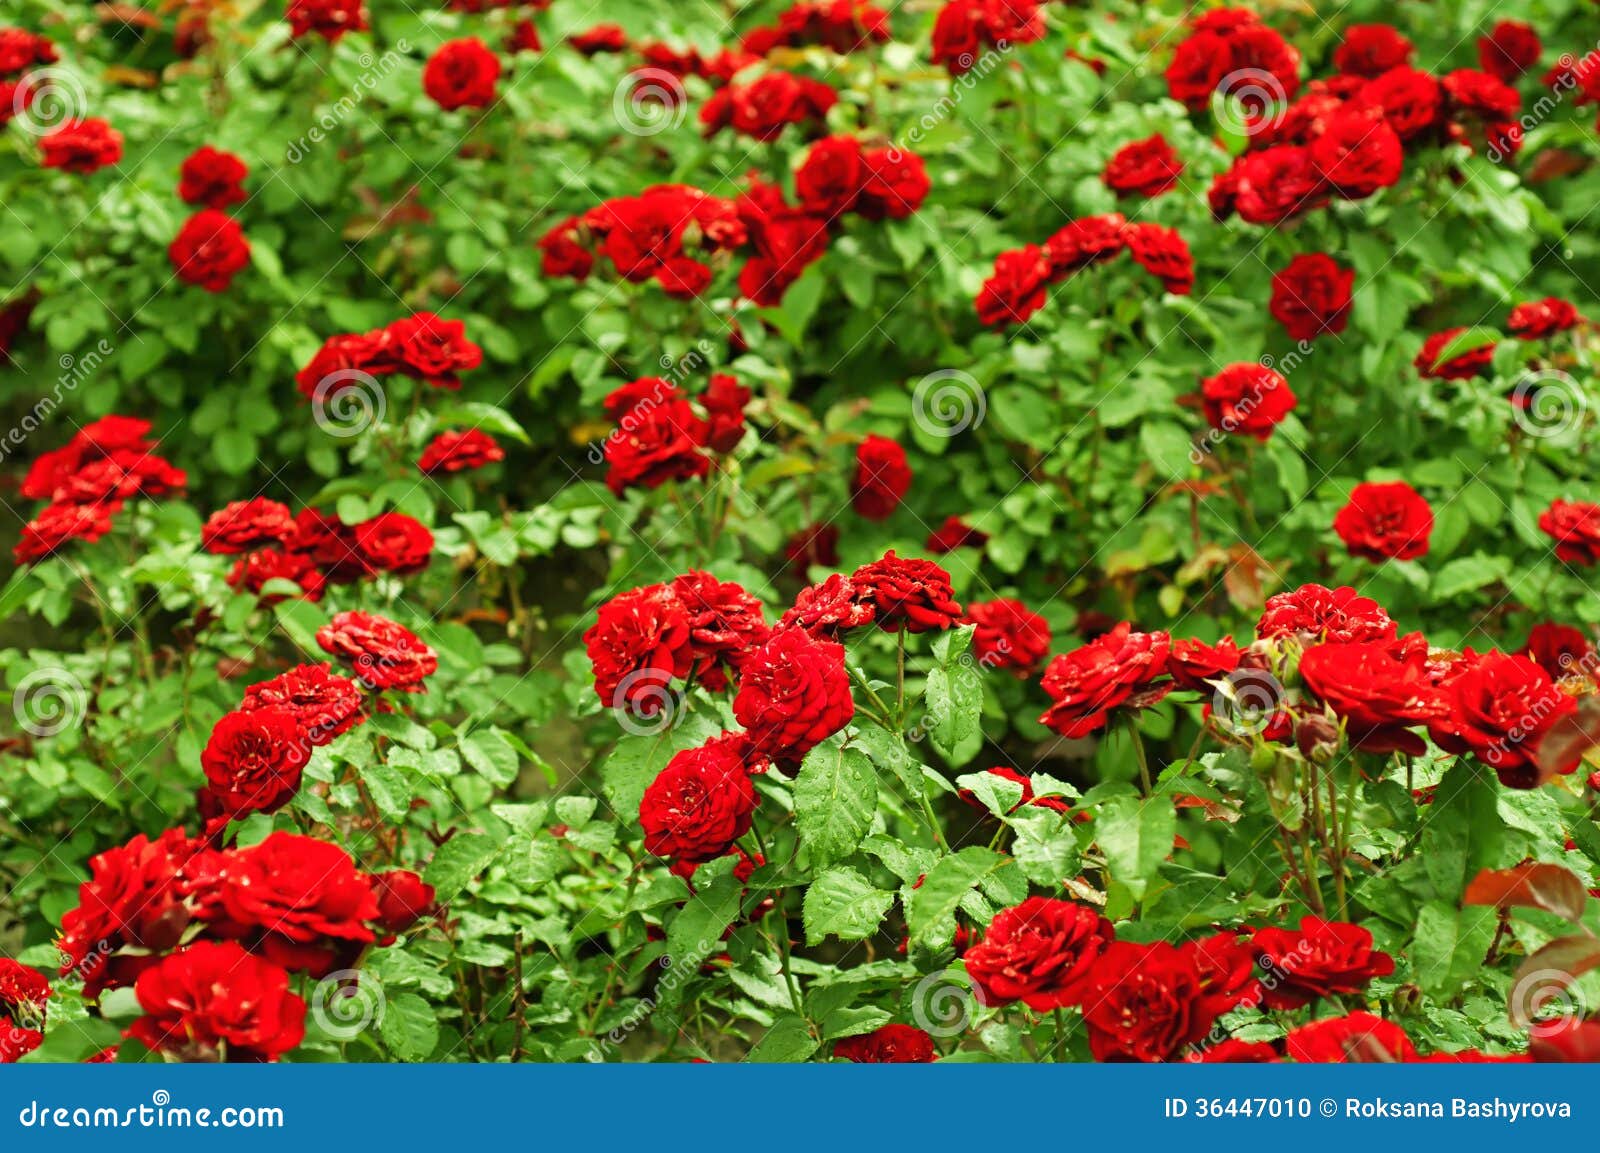 Details 100 jardin de rosas rojo